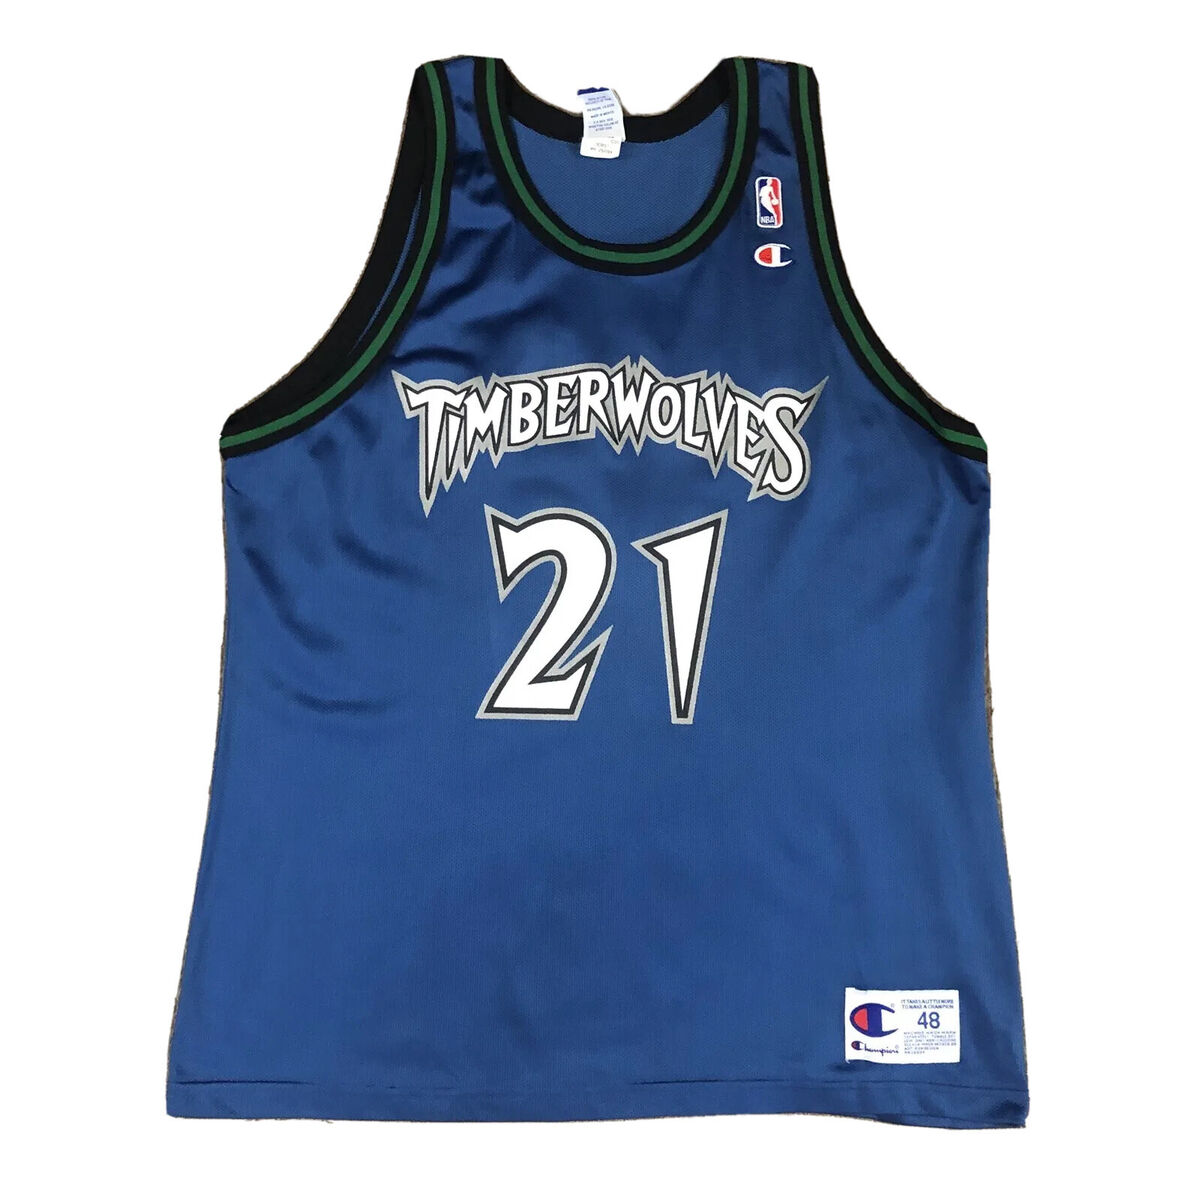 90s timberwolves jersey